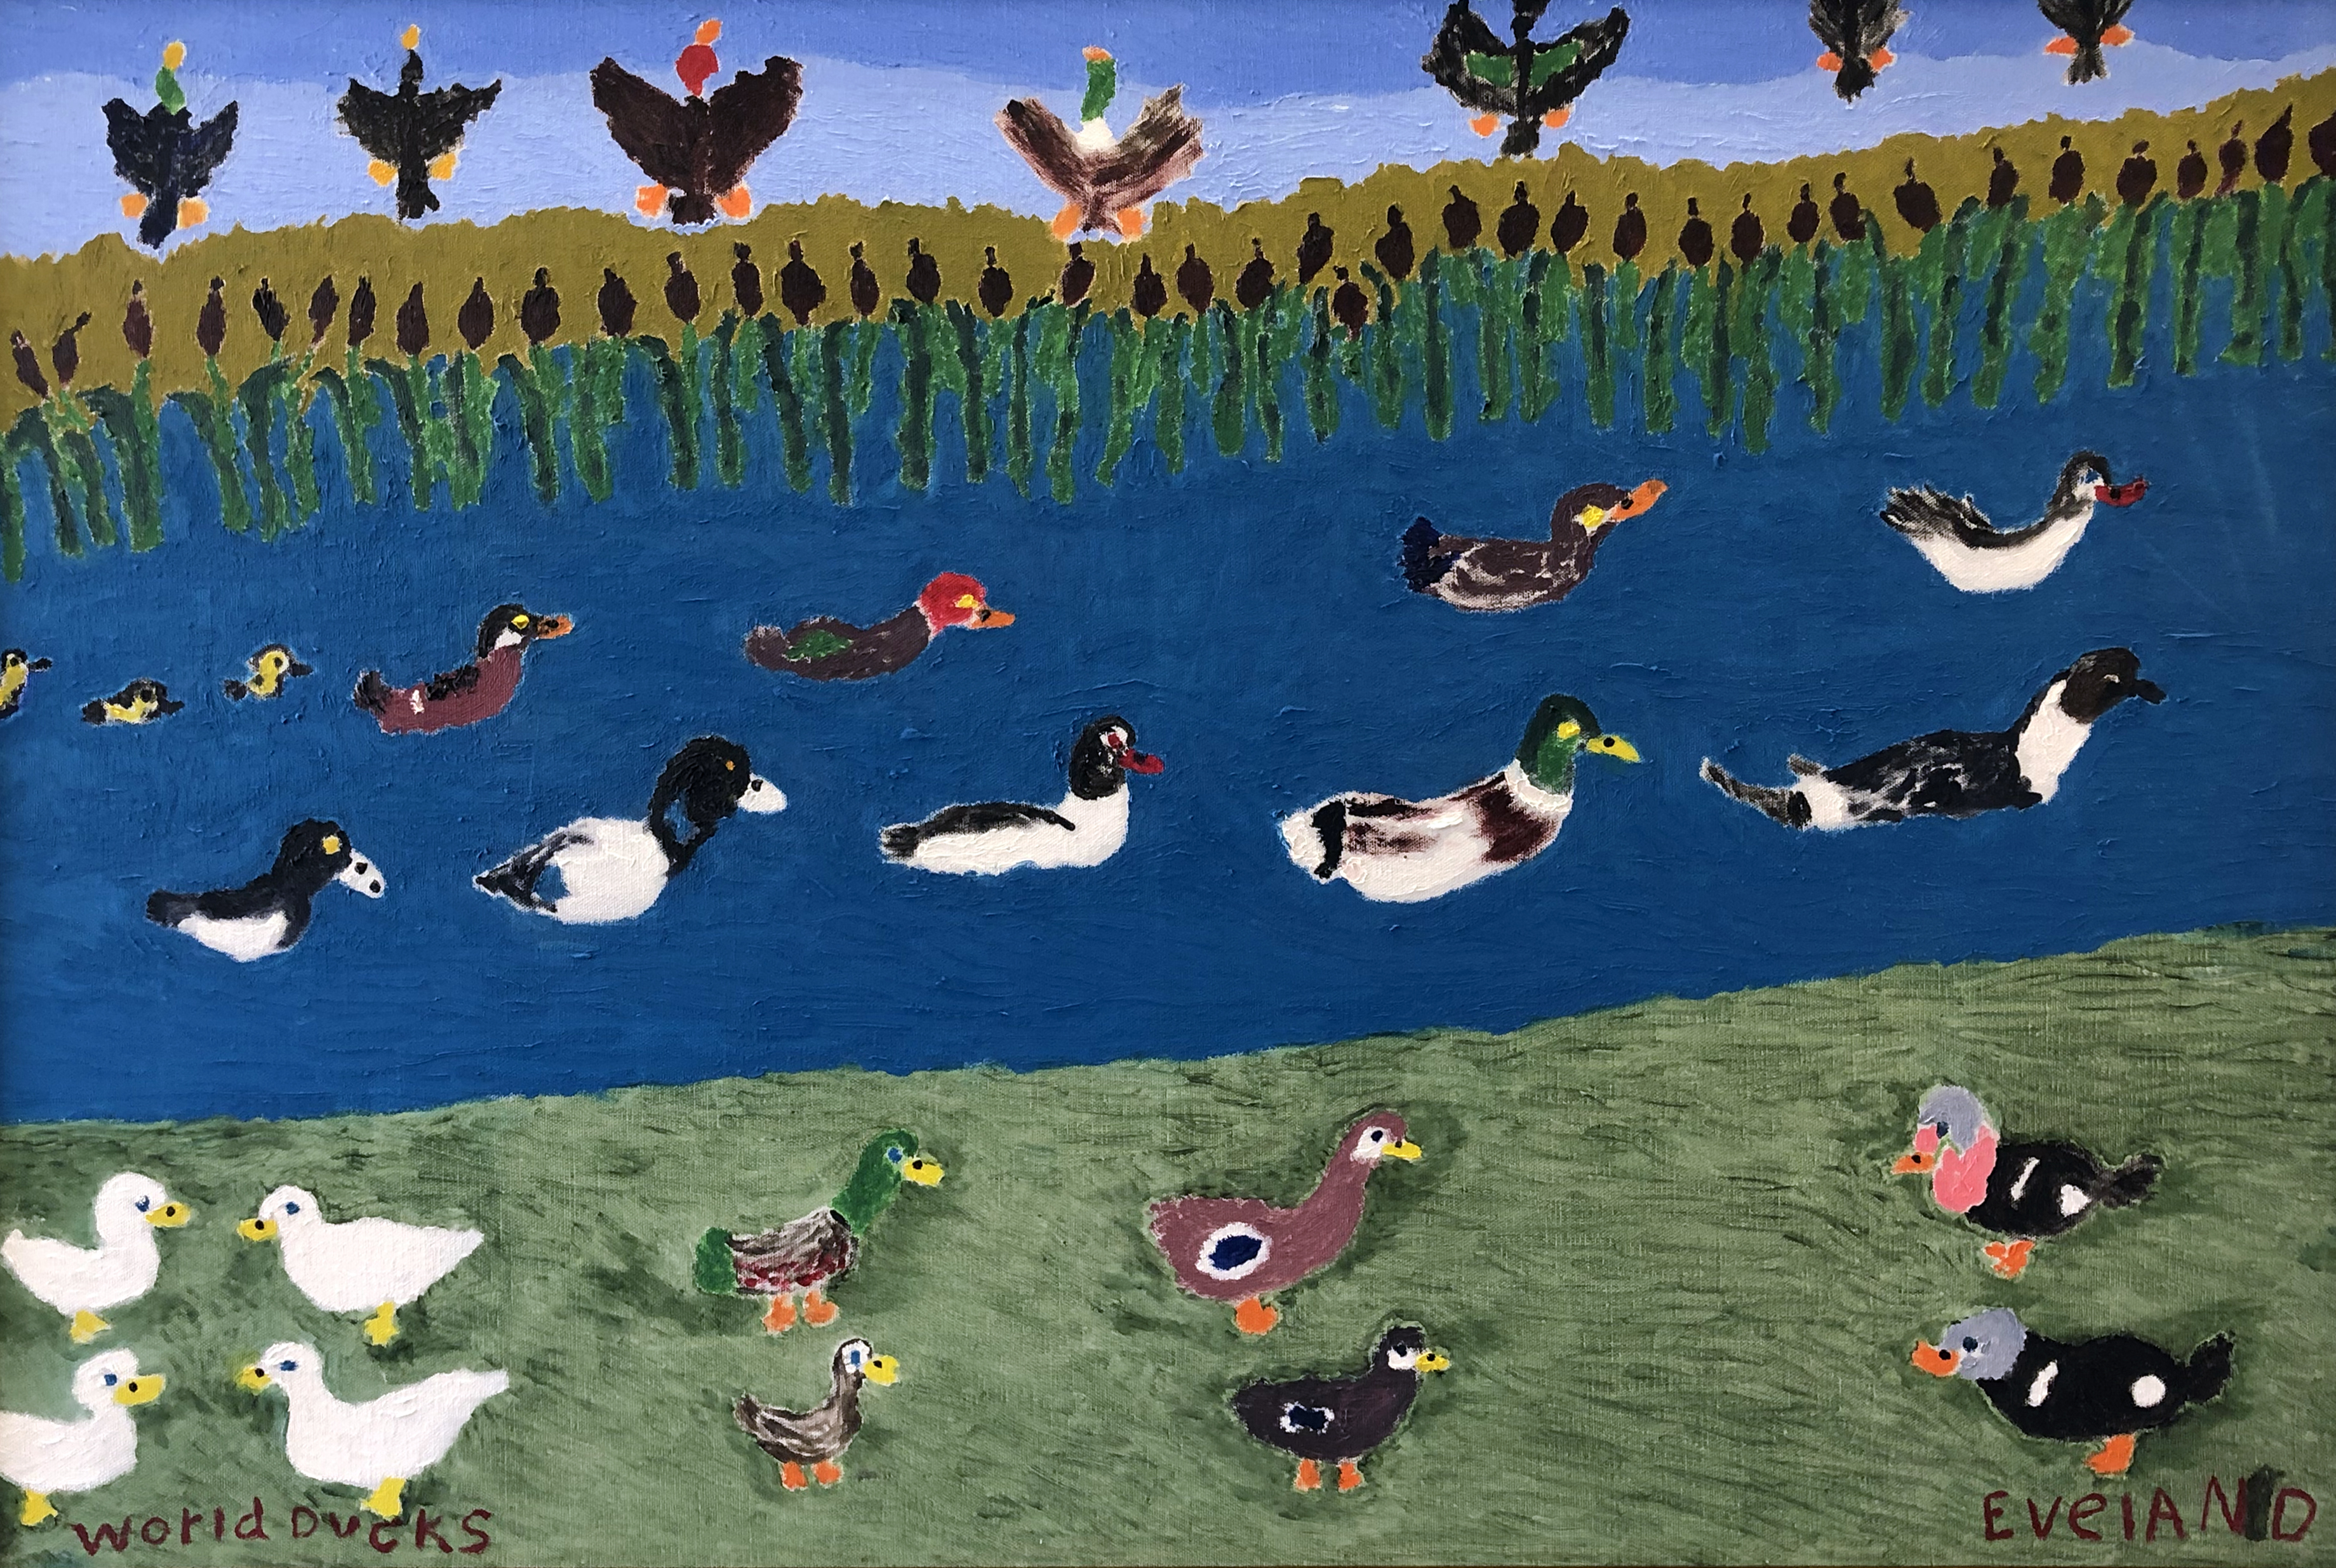 "World Ducks" by Mary Sophia Eveland